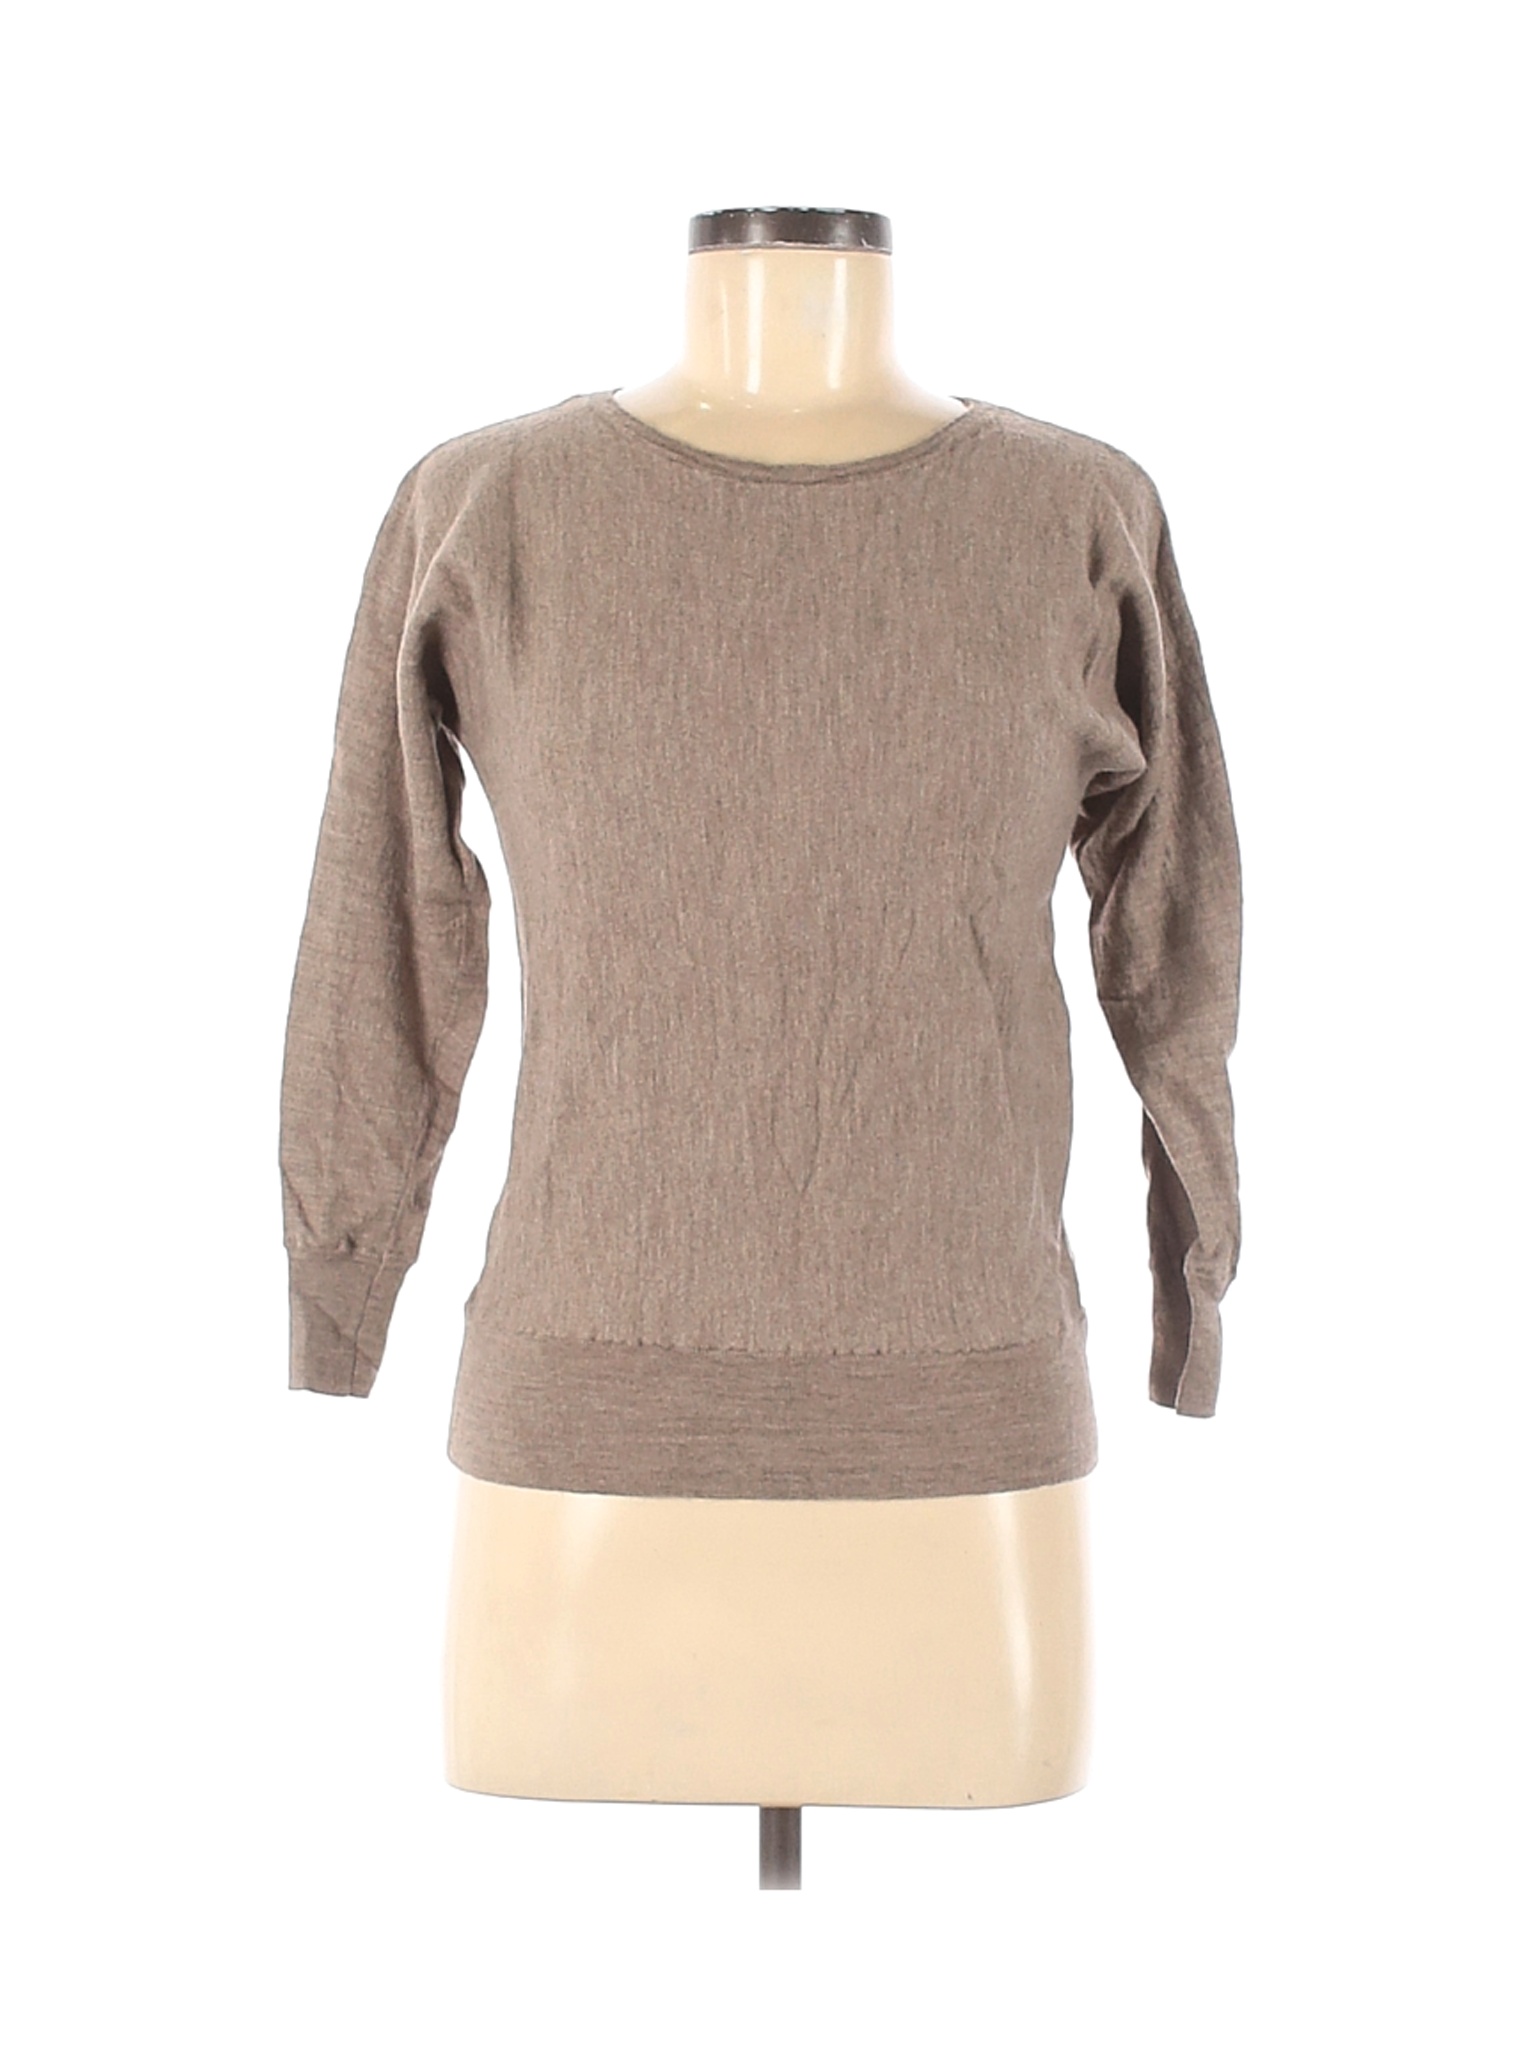 Cynthia Rowley TJX Women Gray Wool Pullover Sweater M | eBay